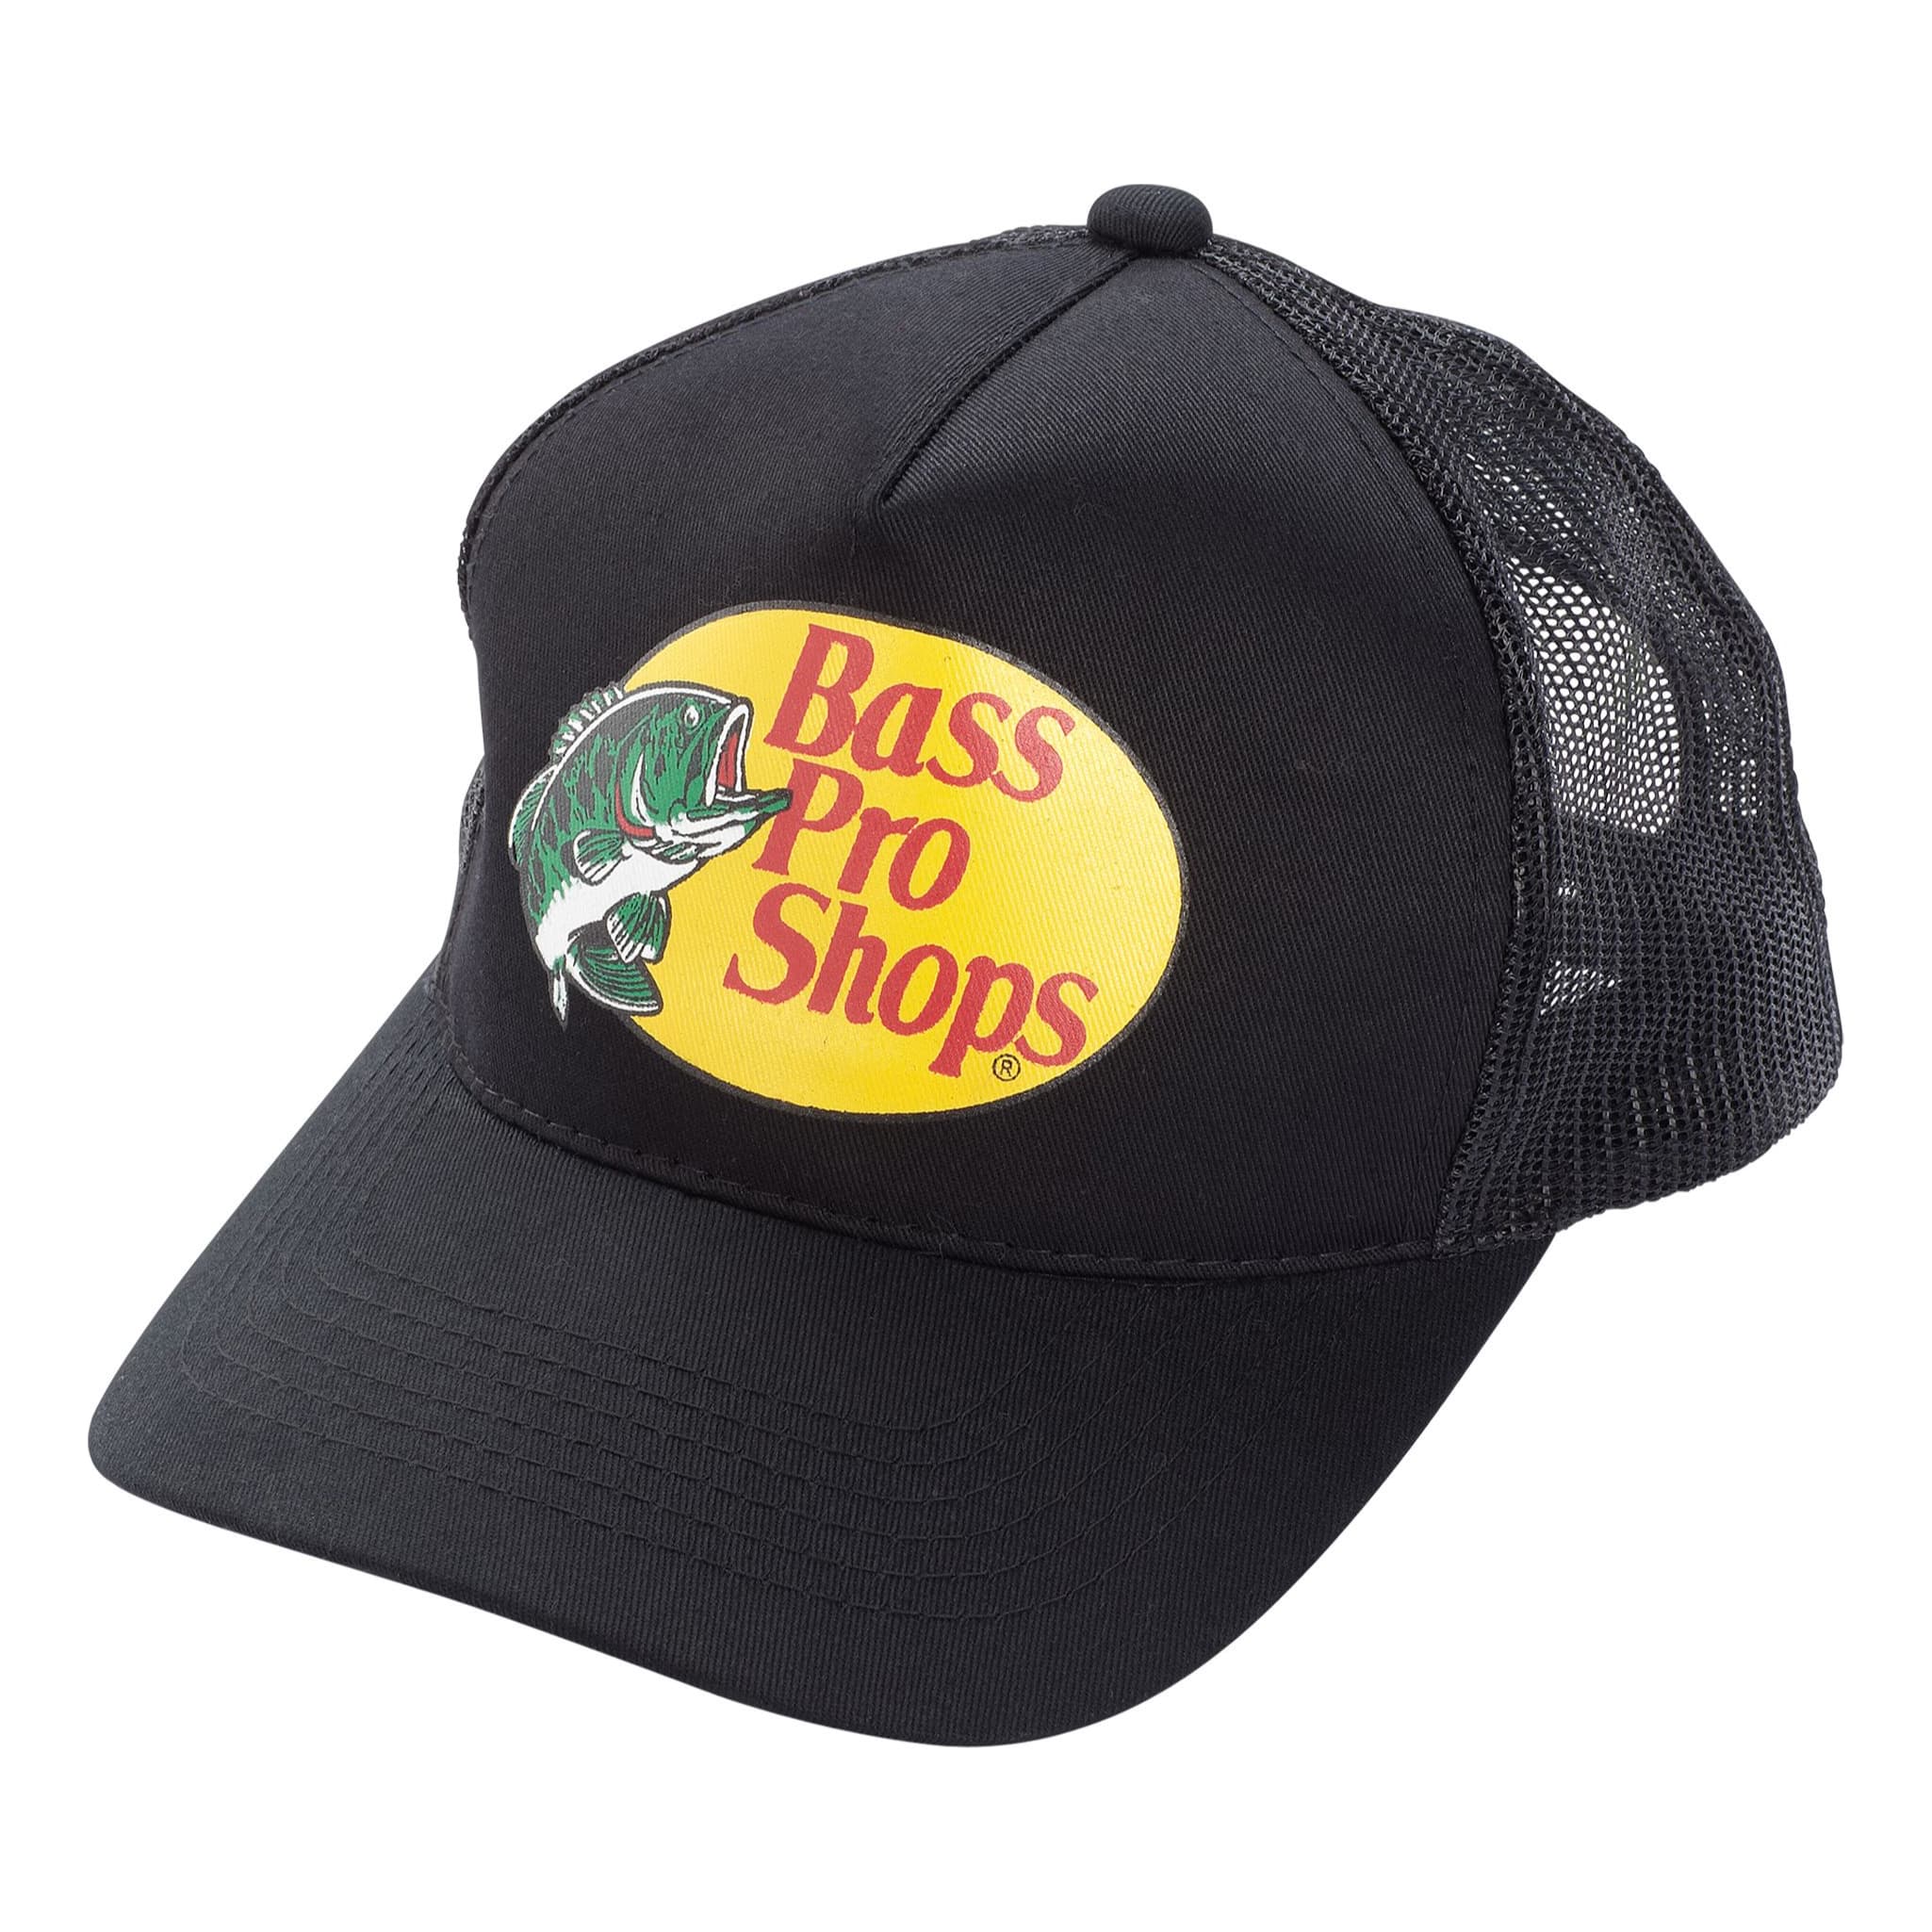 Bass Pro Shops® Trucker Cap - Black